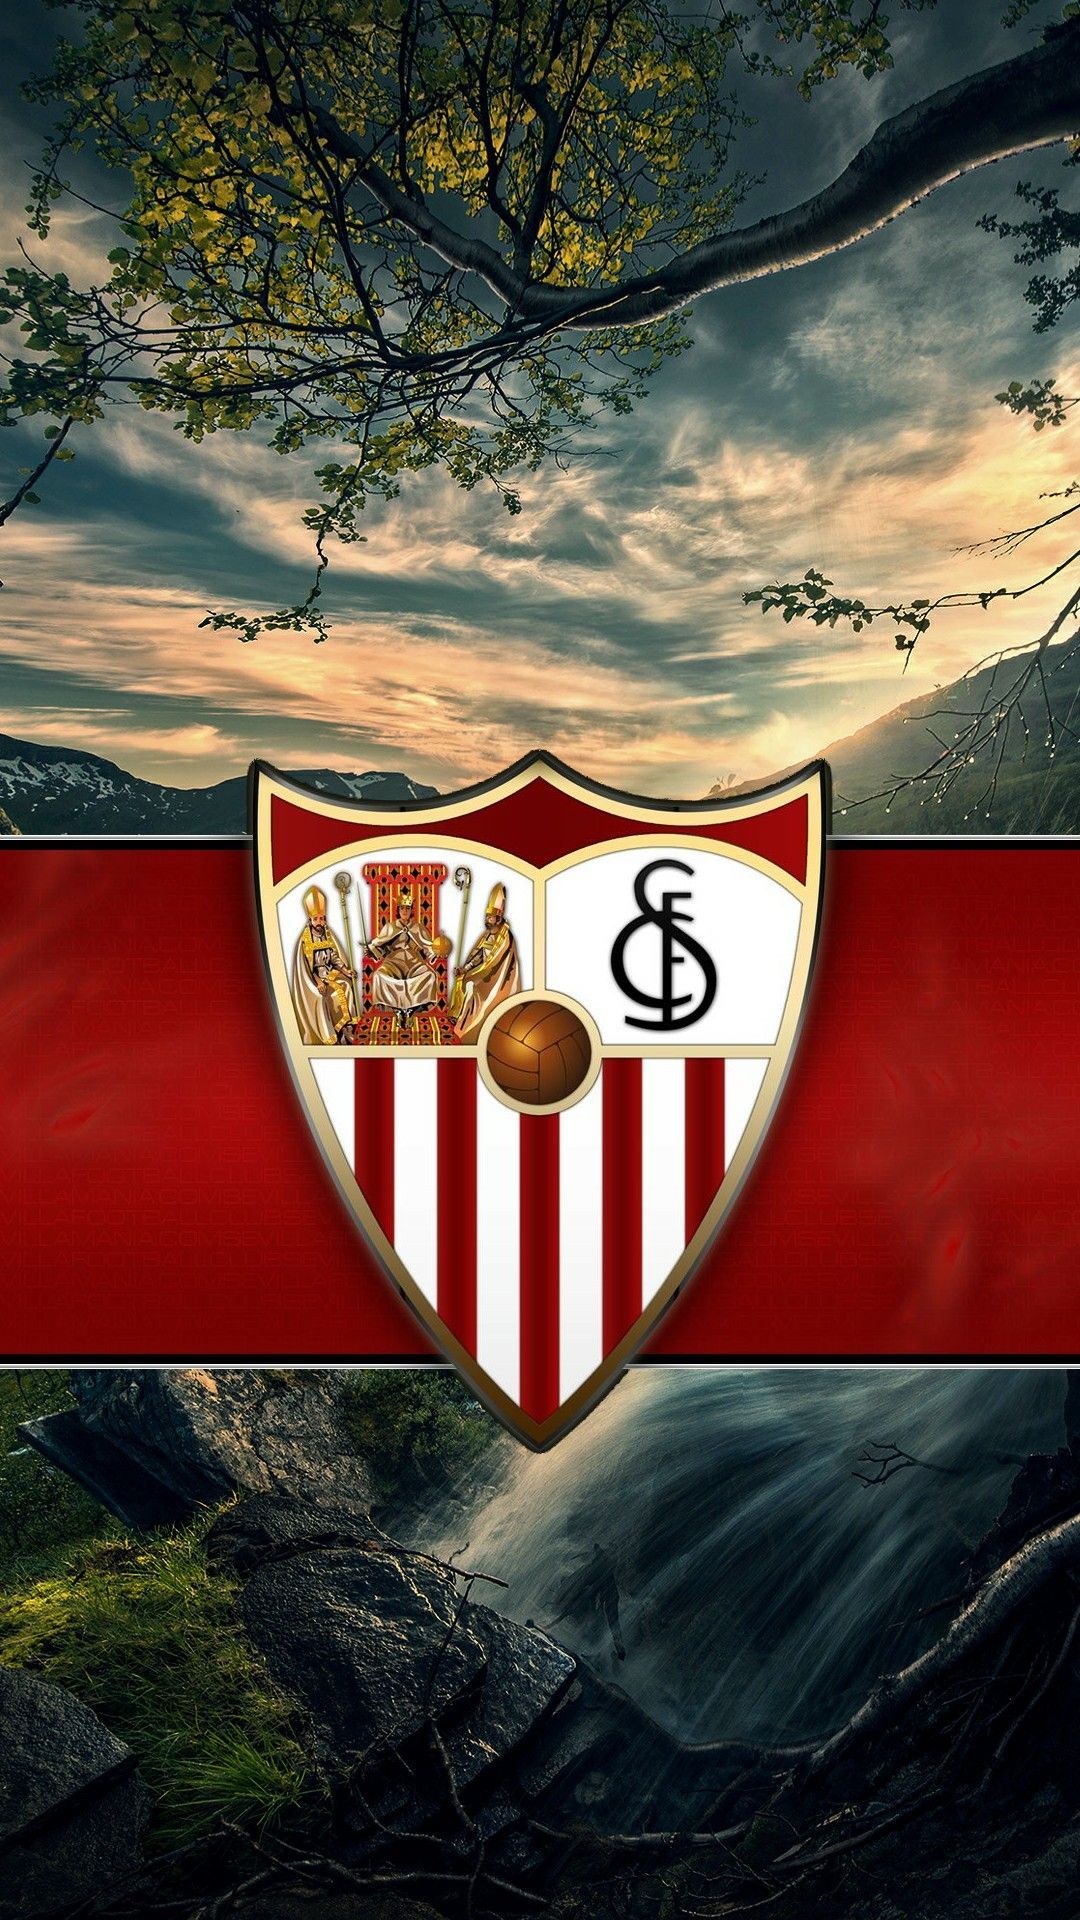 Fondo de pantalla del Sevilla FC. #SevillaFC | |утбол | Sevilla futbol club